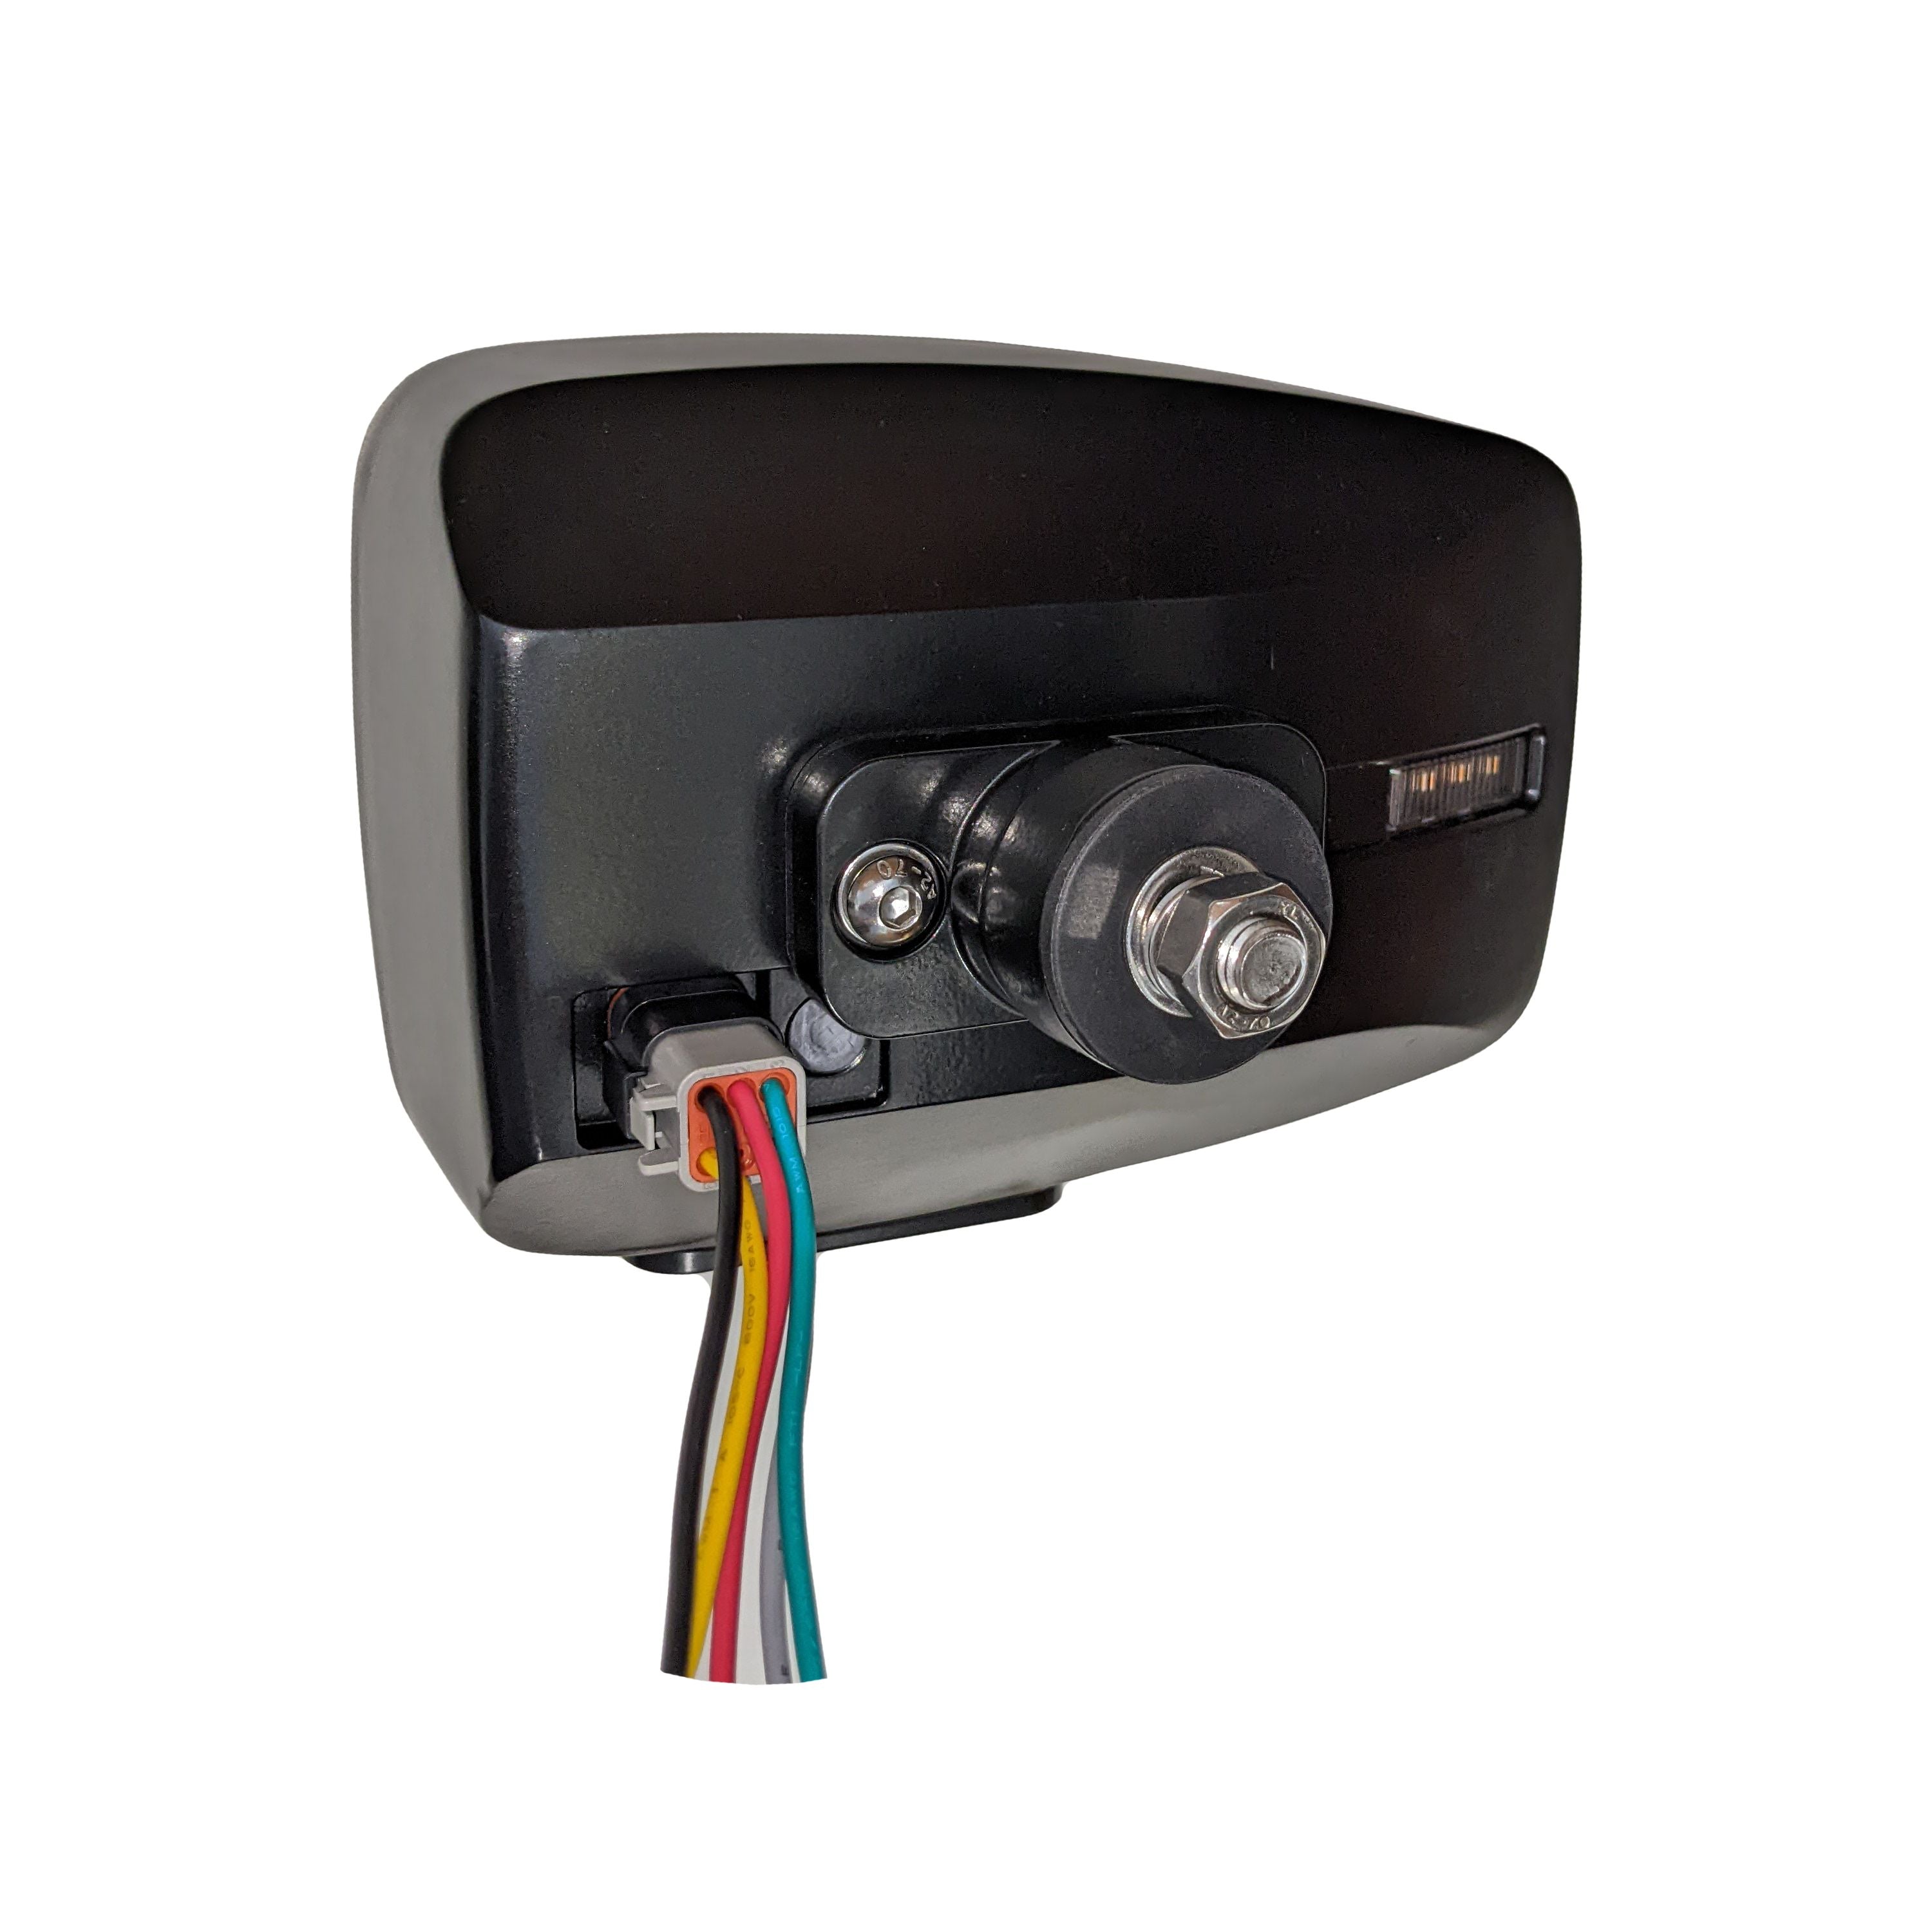 Unibond LWP6900H-2K - Auto Heated Lens LED Headlamp (in pair)